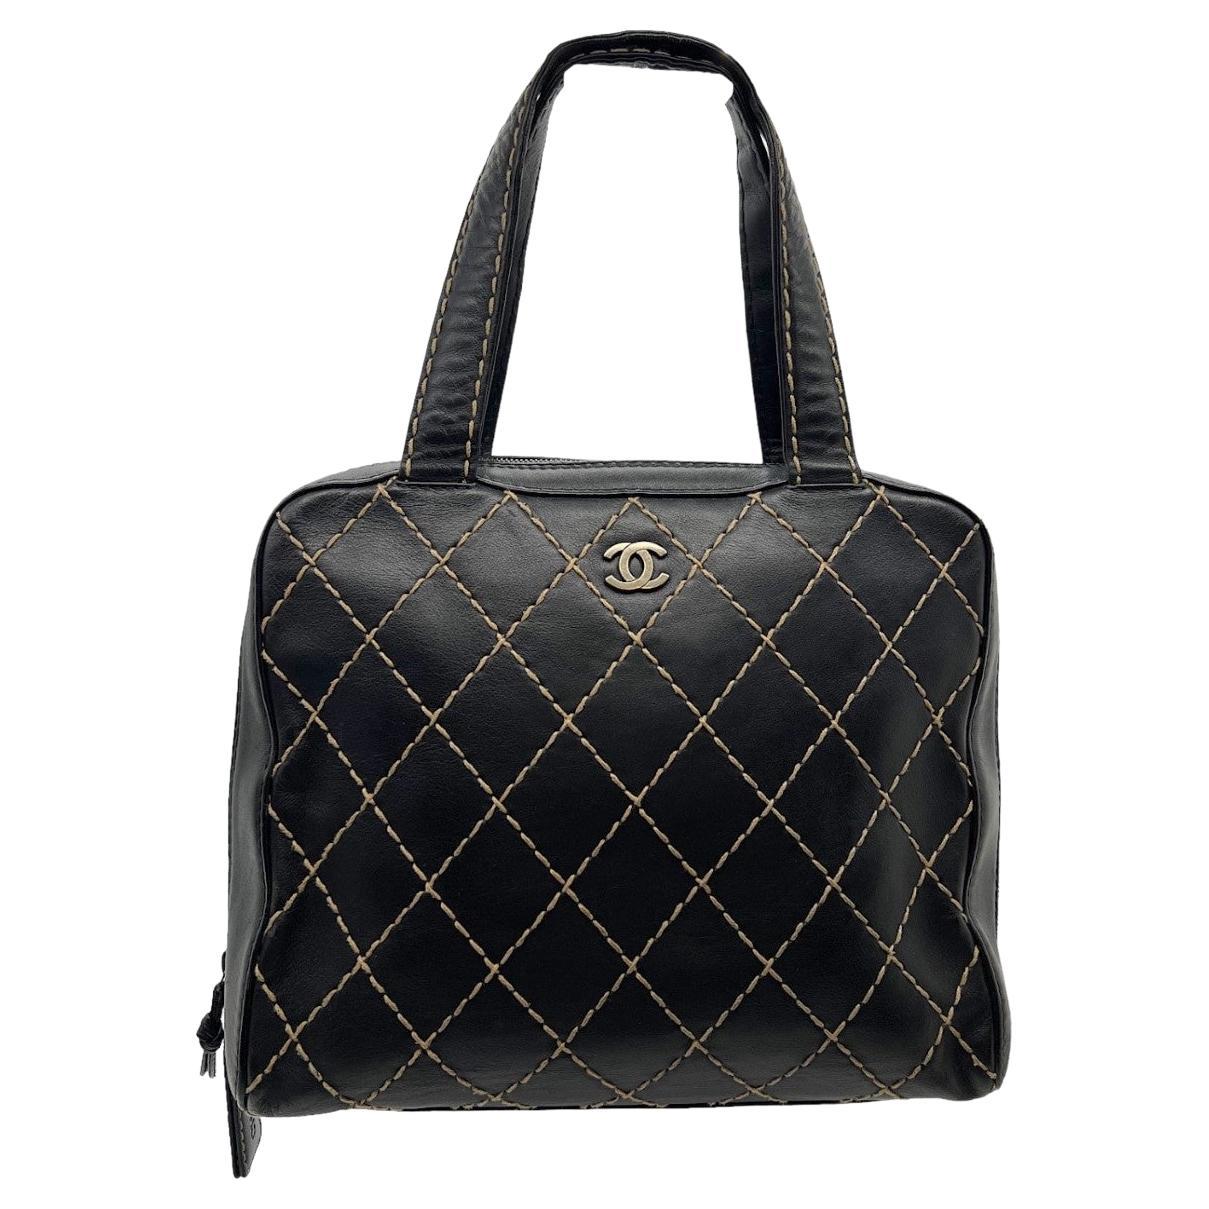 Chanel Vintage Black Quilted Wild Stitch Handbag For Sale